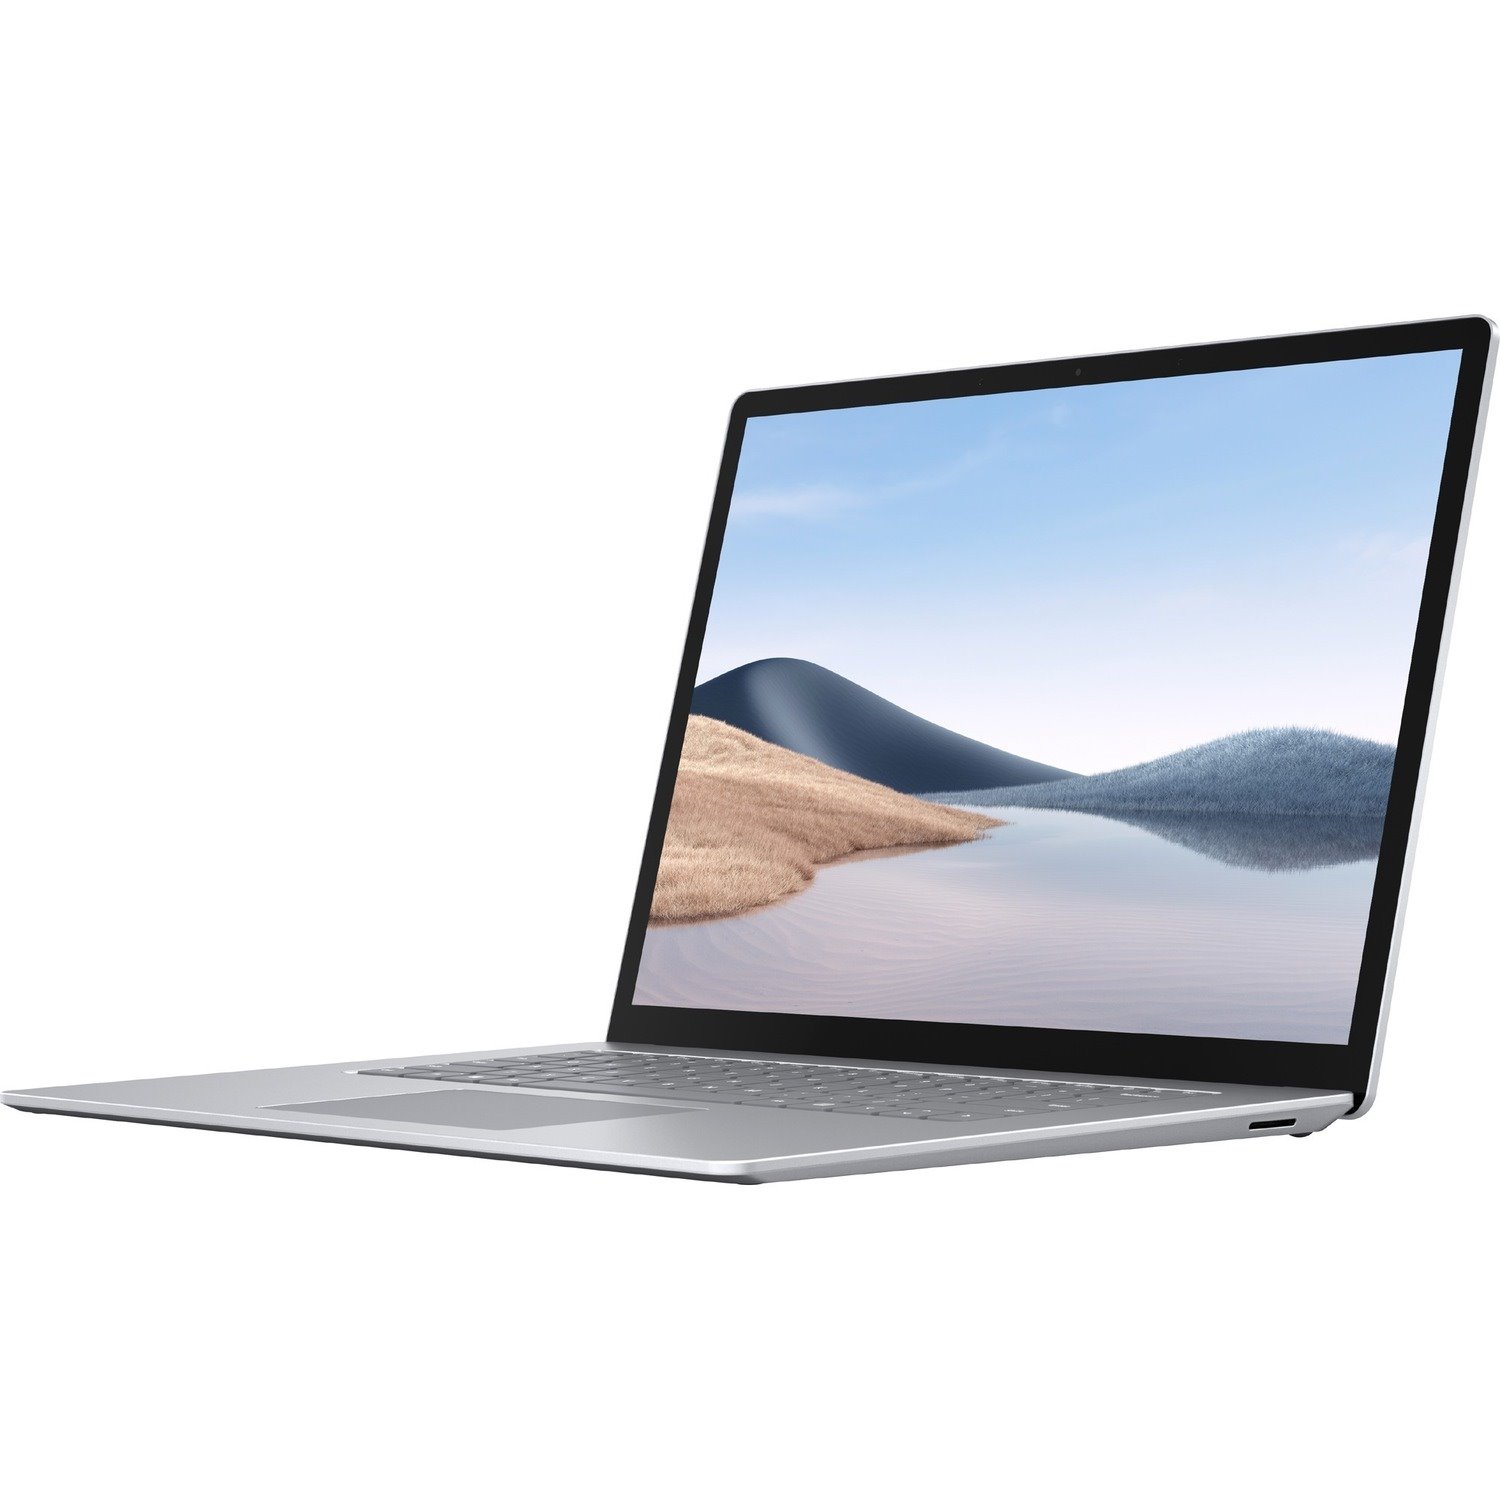 Microsoft Surface Laptop 4 38.1 cm (15") Touchscreen Notebook - 2496 x 1664 - Intel Core i7 - 16 GB Total RAM - 512 GB SSD - Platinum